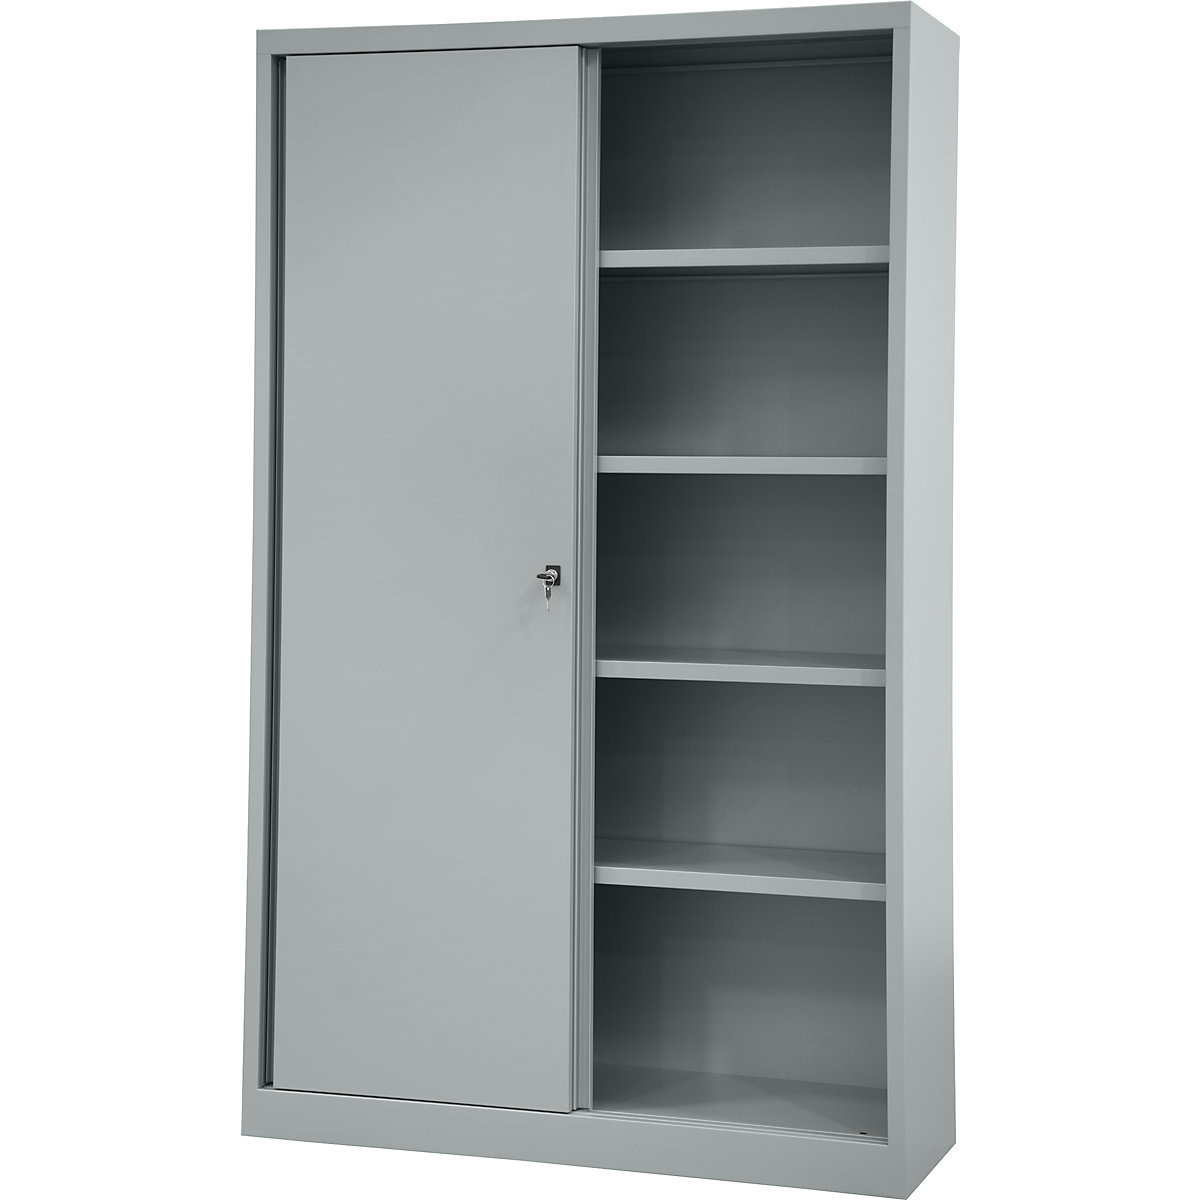 ECO sliding door cupboard – BISLEY, 4 shelves, 5 file heights, silver-8